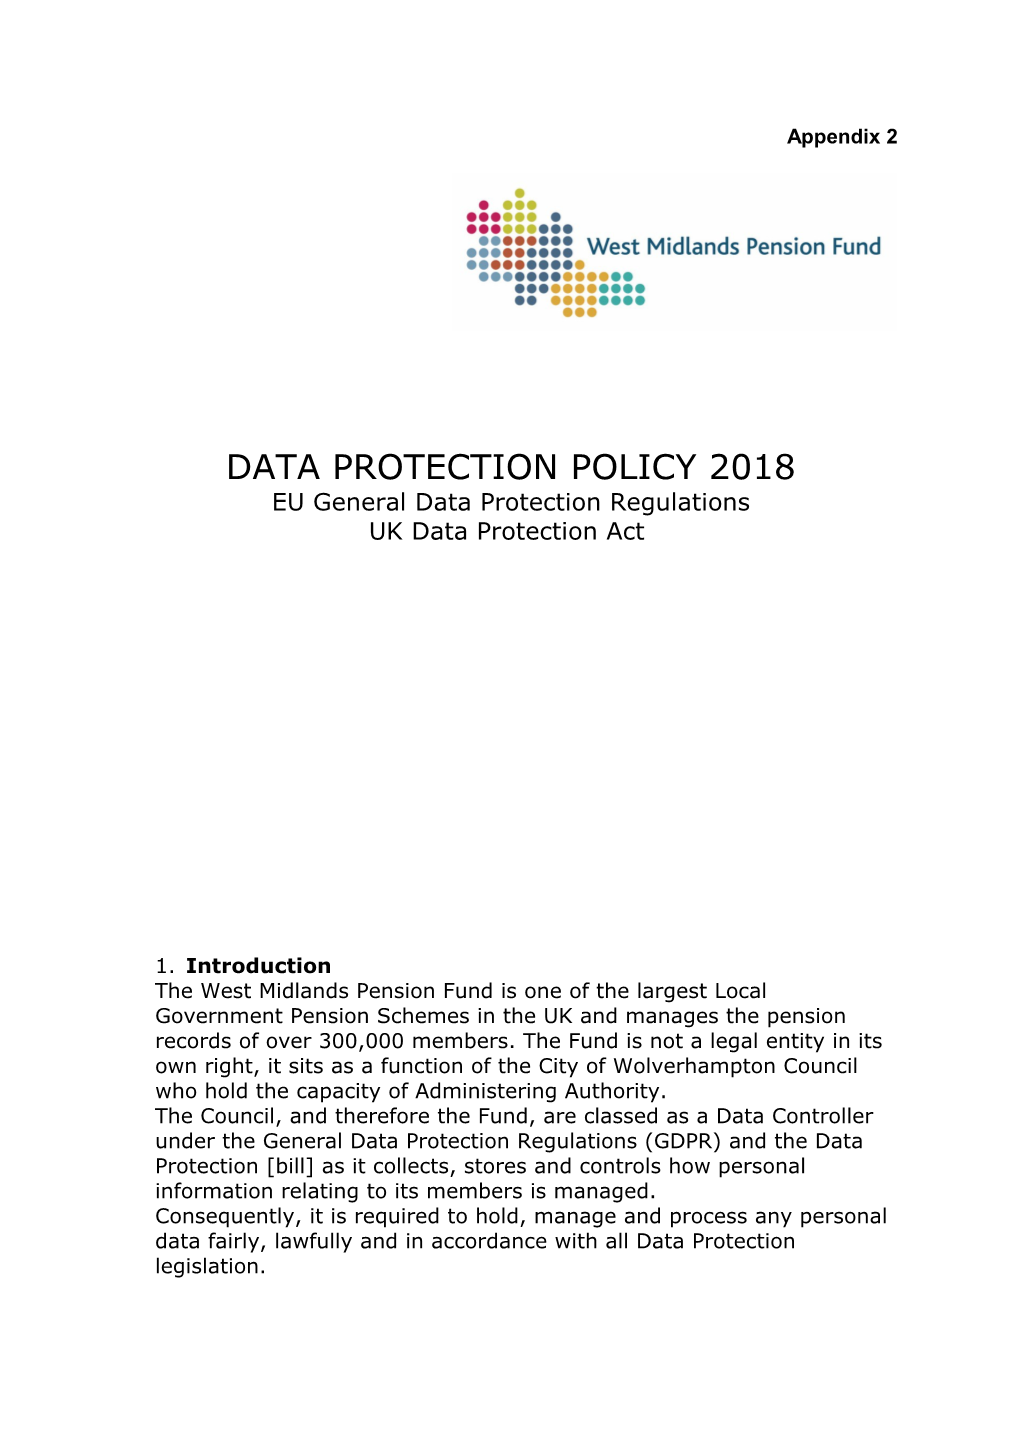 EU General Data Protection Regulations